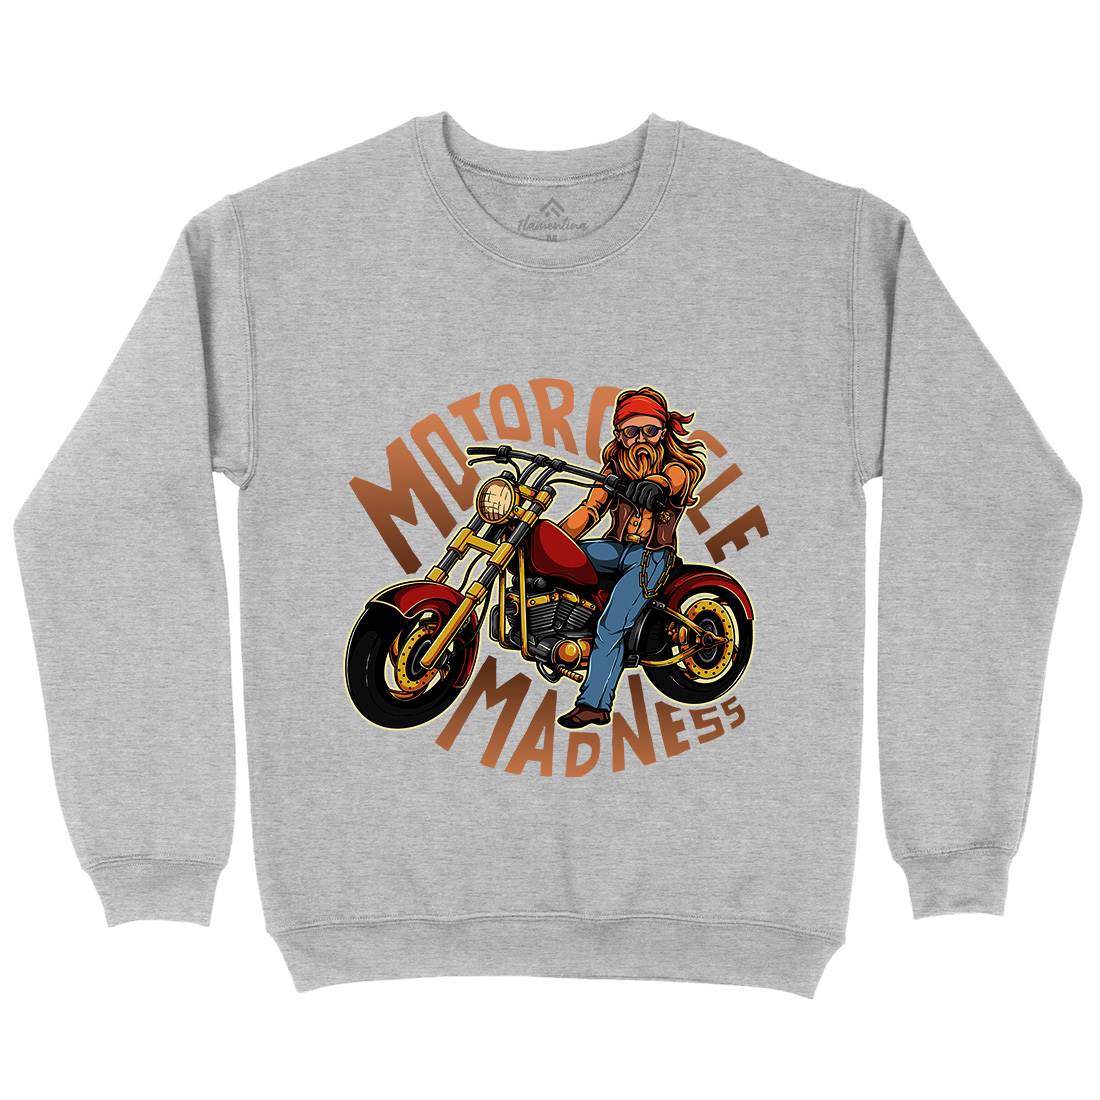 Madness Mens Crew Neck Sweatshirt Motorcycles A438